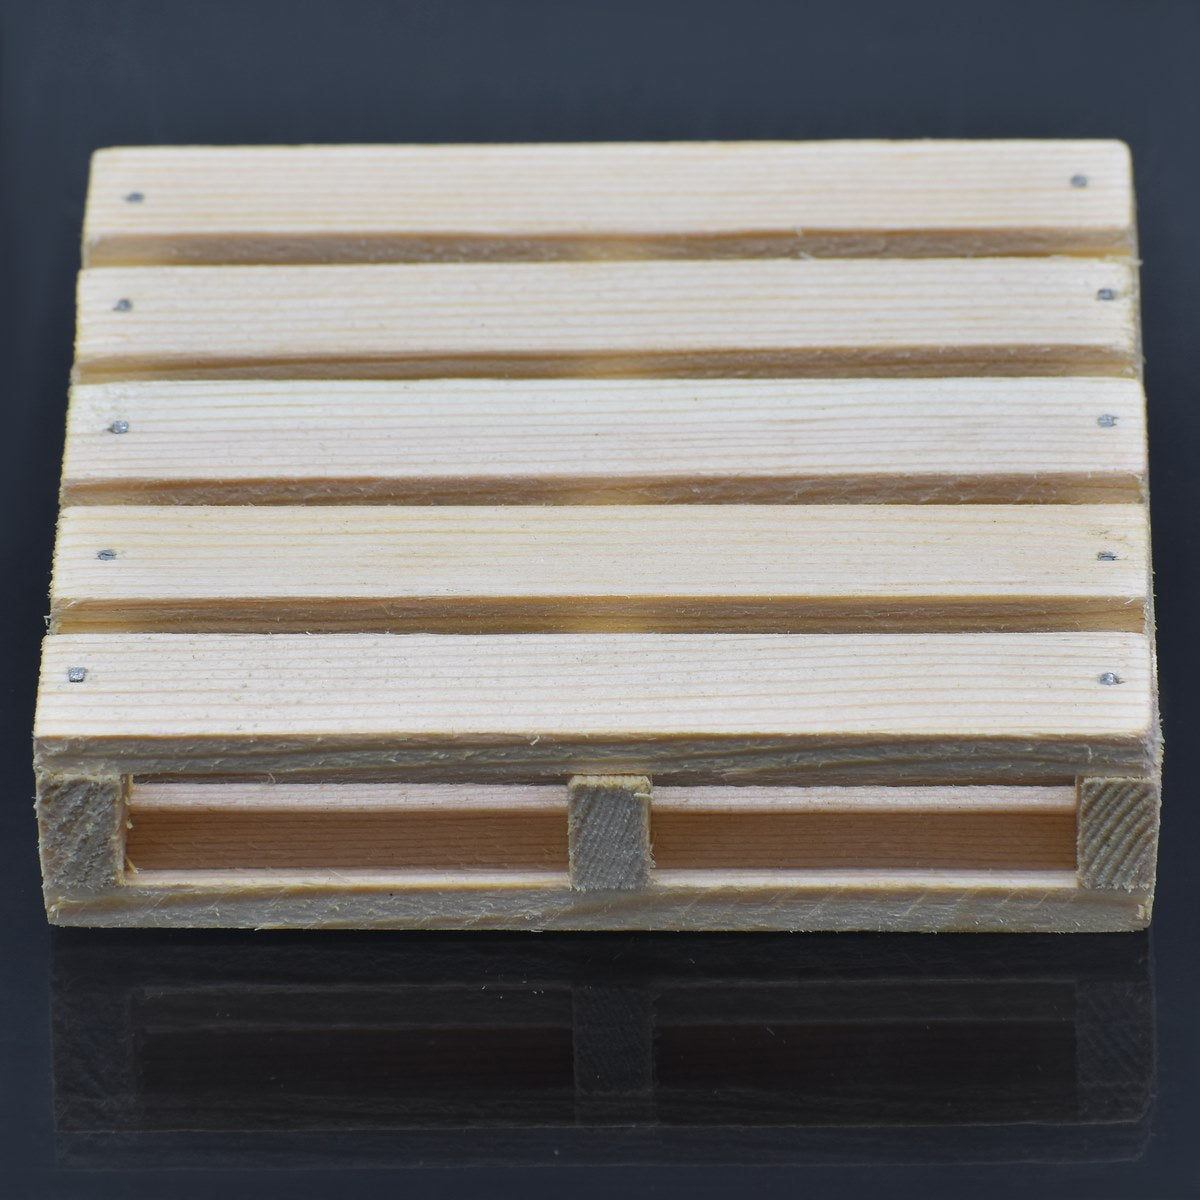 jags-mumbai Wooden & Plastic Box Wooden Tray 4 Inch